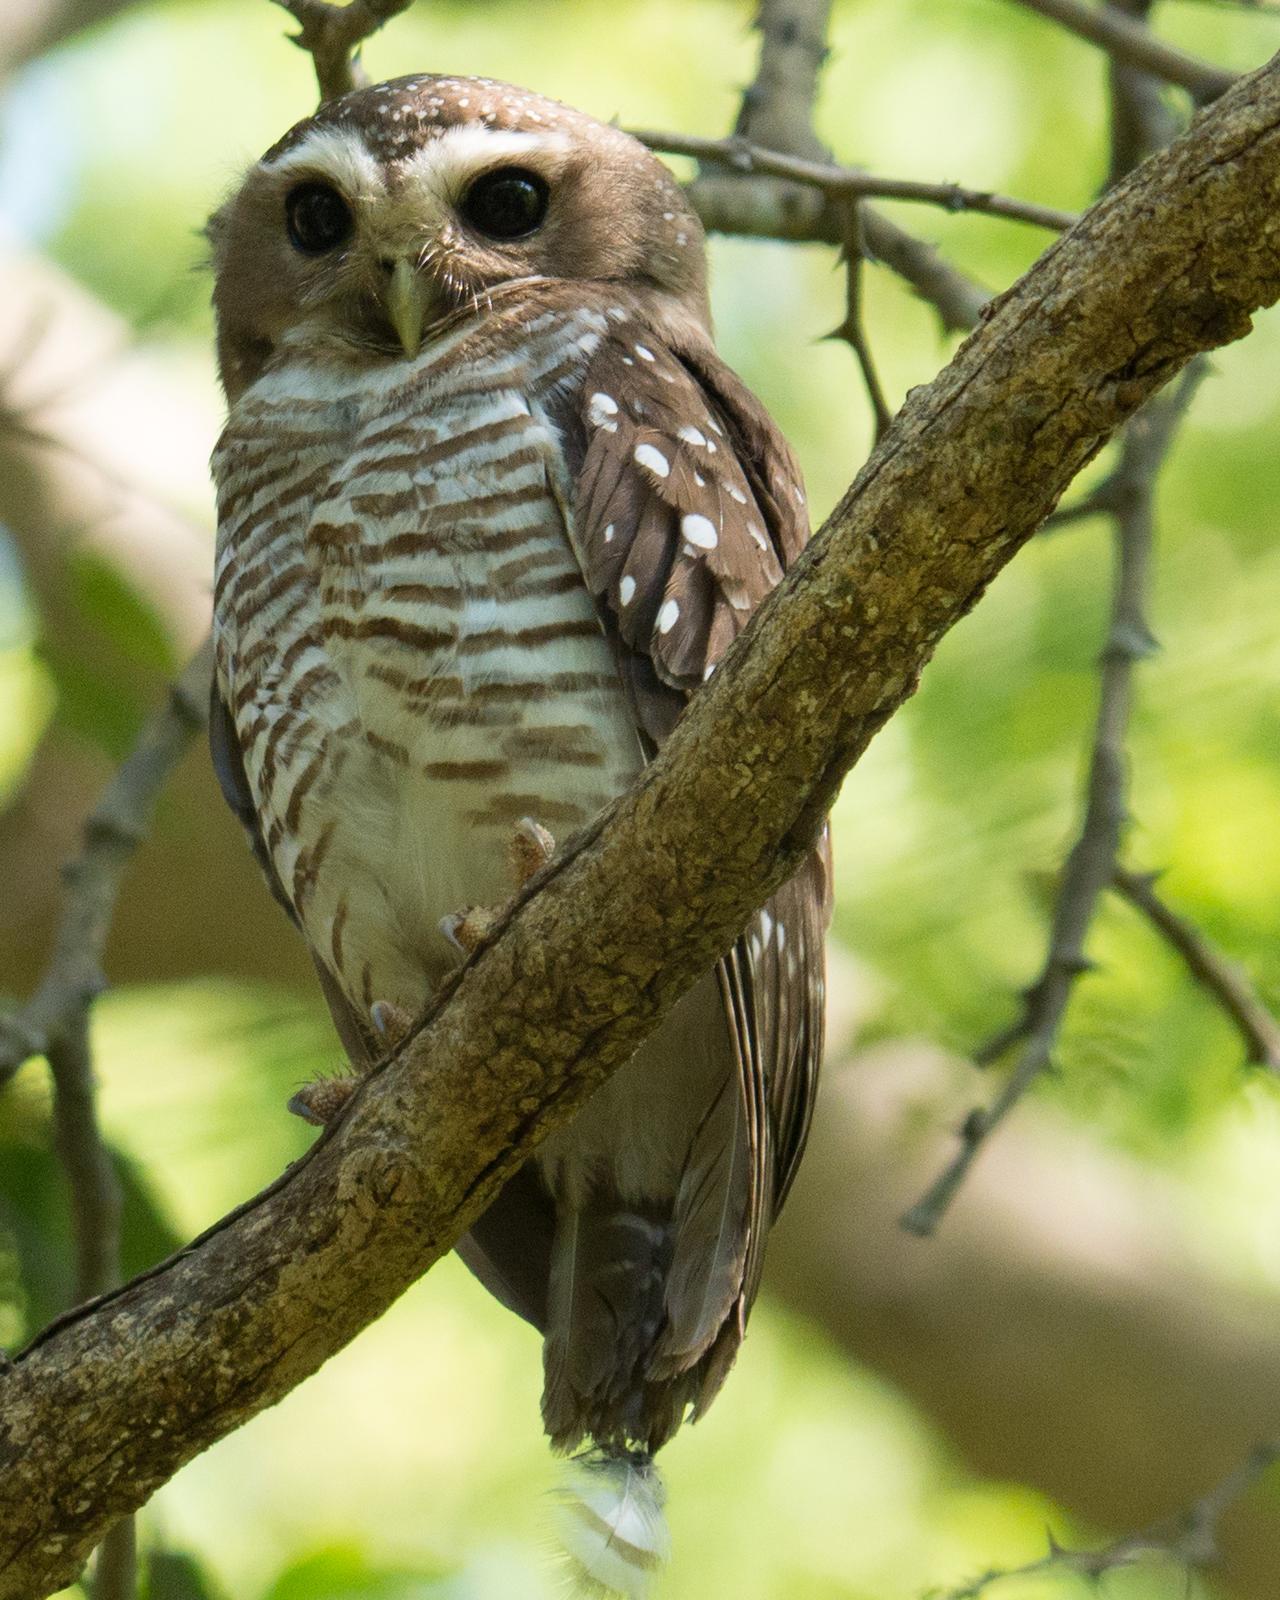 White-browed Owl Photo by Randy Siebert